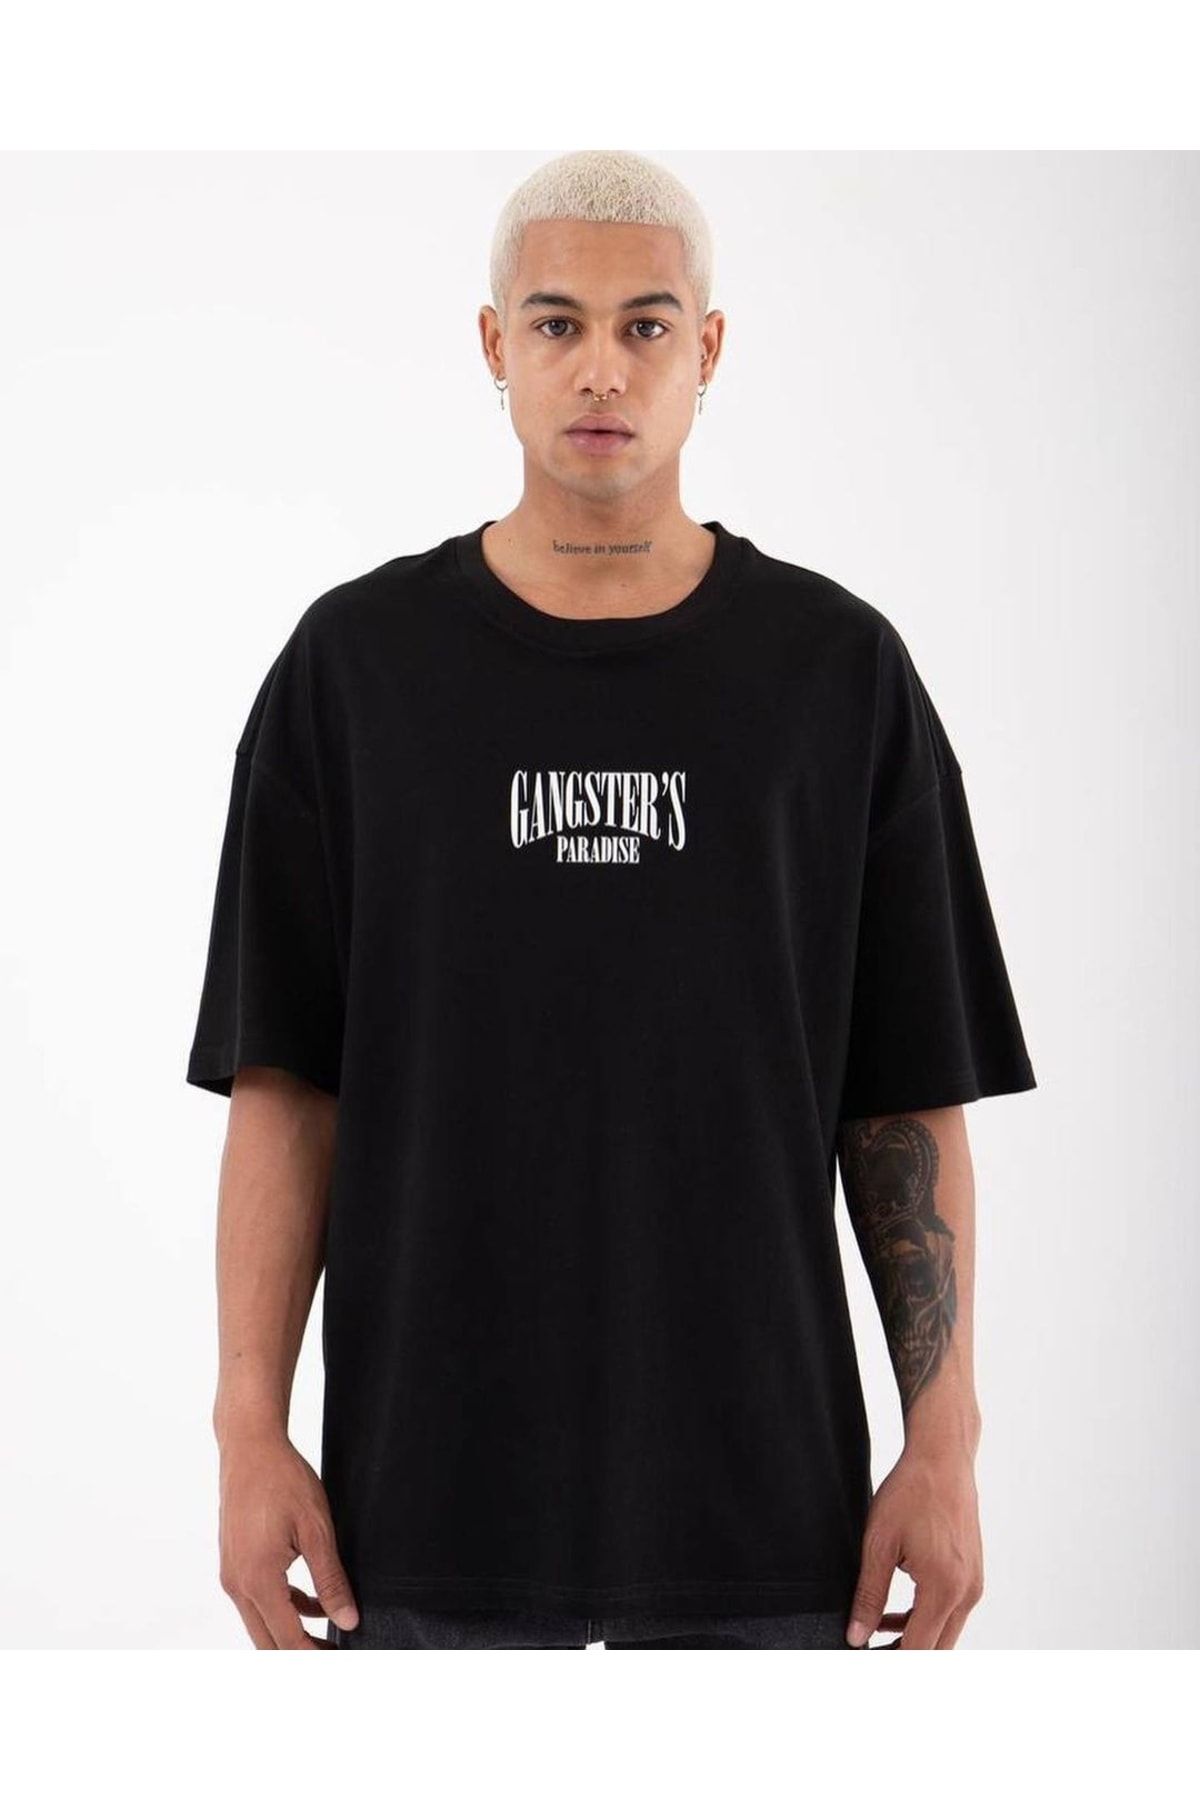 Foxanger outdoors Gangsta Paradise Baskılı Oversize T-shirt %100 Pamuklu Penye Kumaş